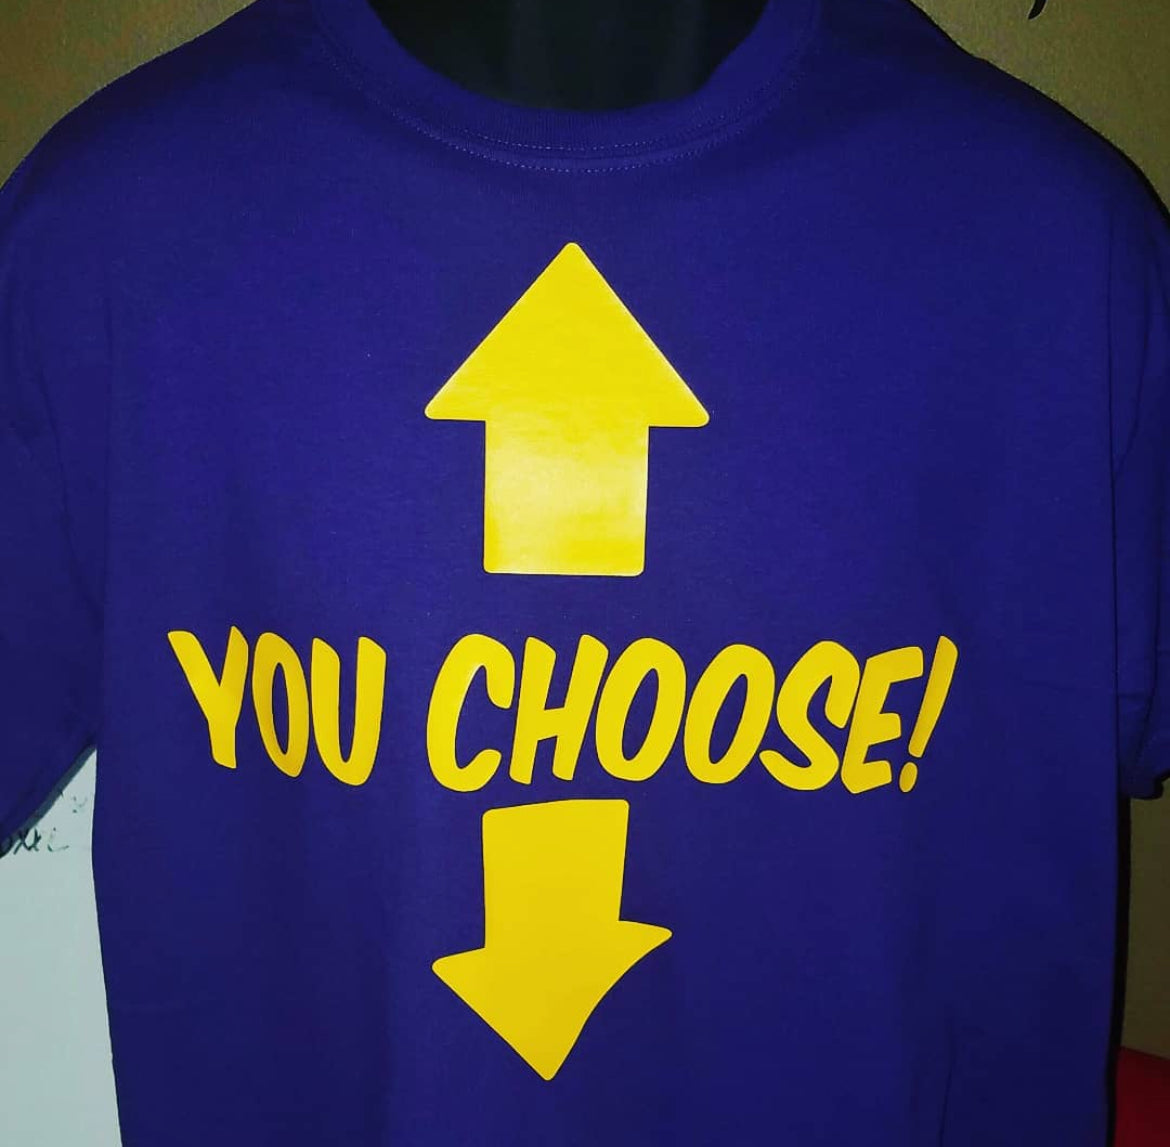 Omega Psi Phi “You Choose”